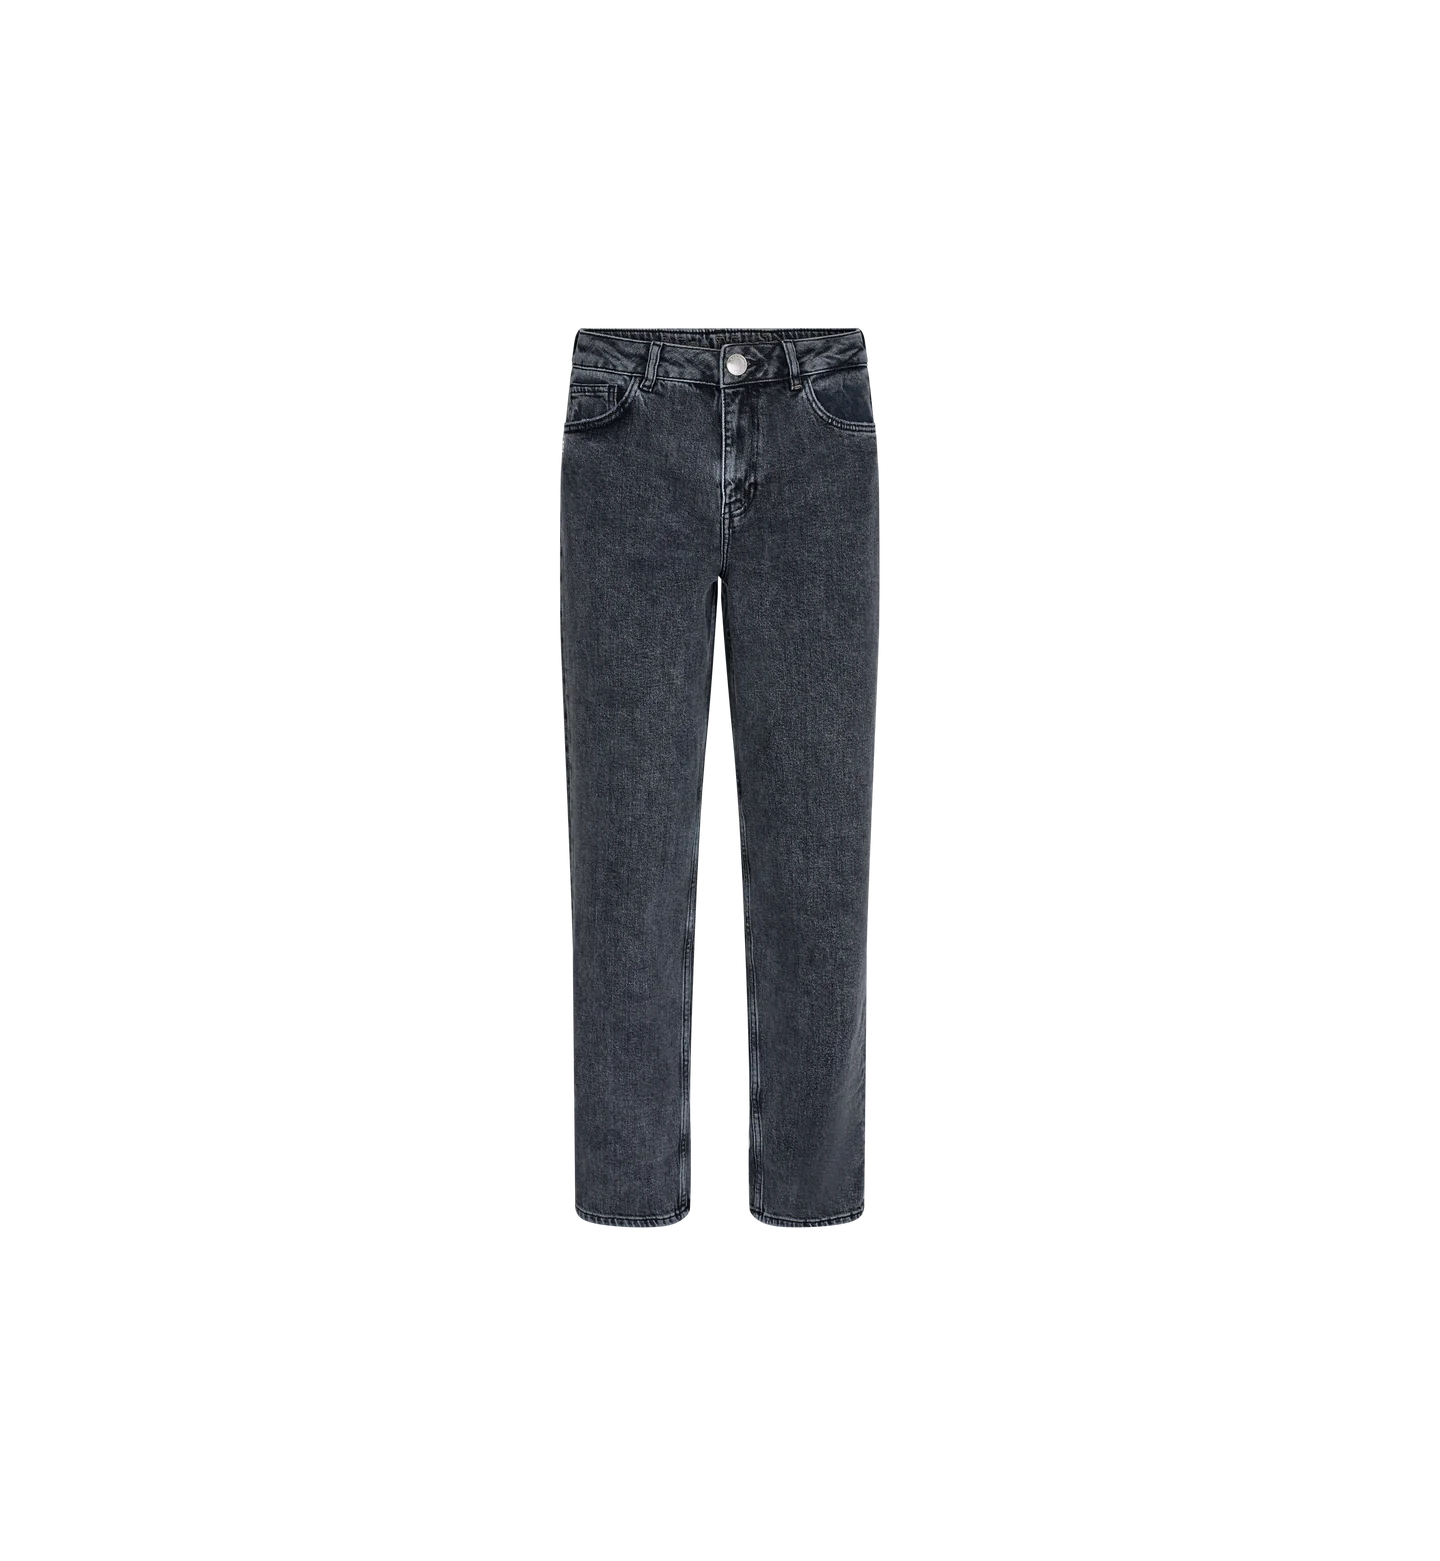 Mos Mosh - Stella Spot Jeans